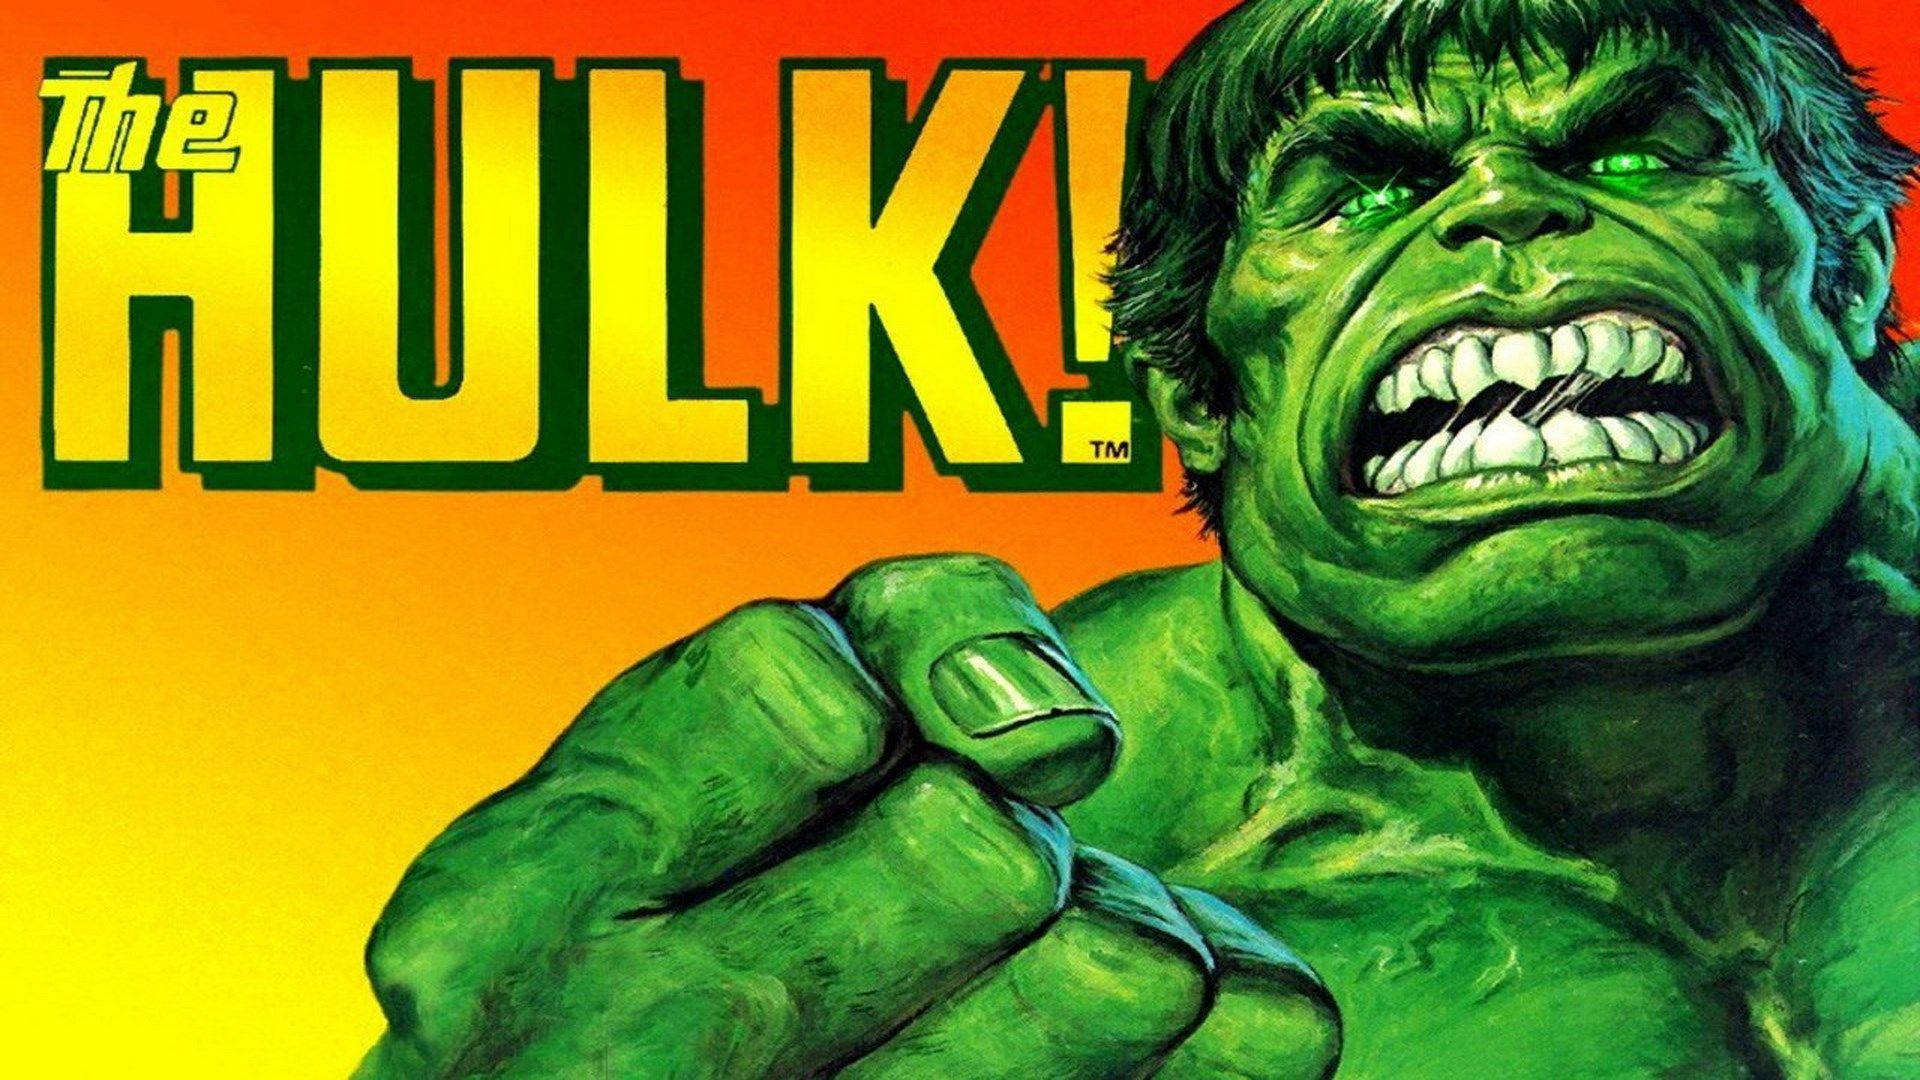 Hulk 1920X1080 Wallpaper and Background Image